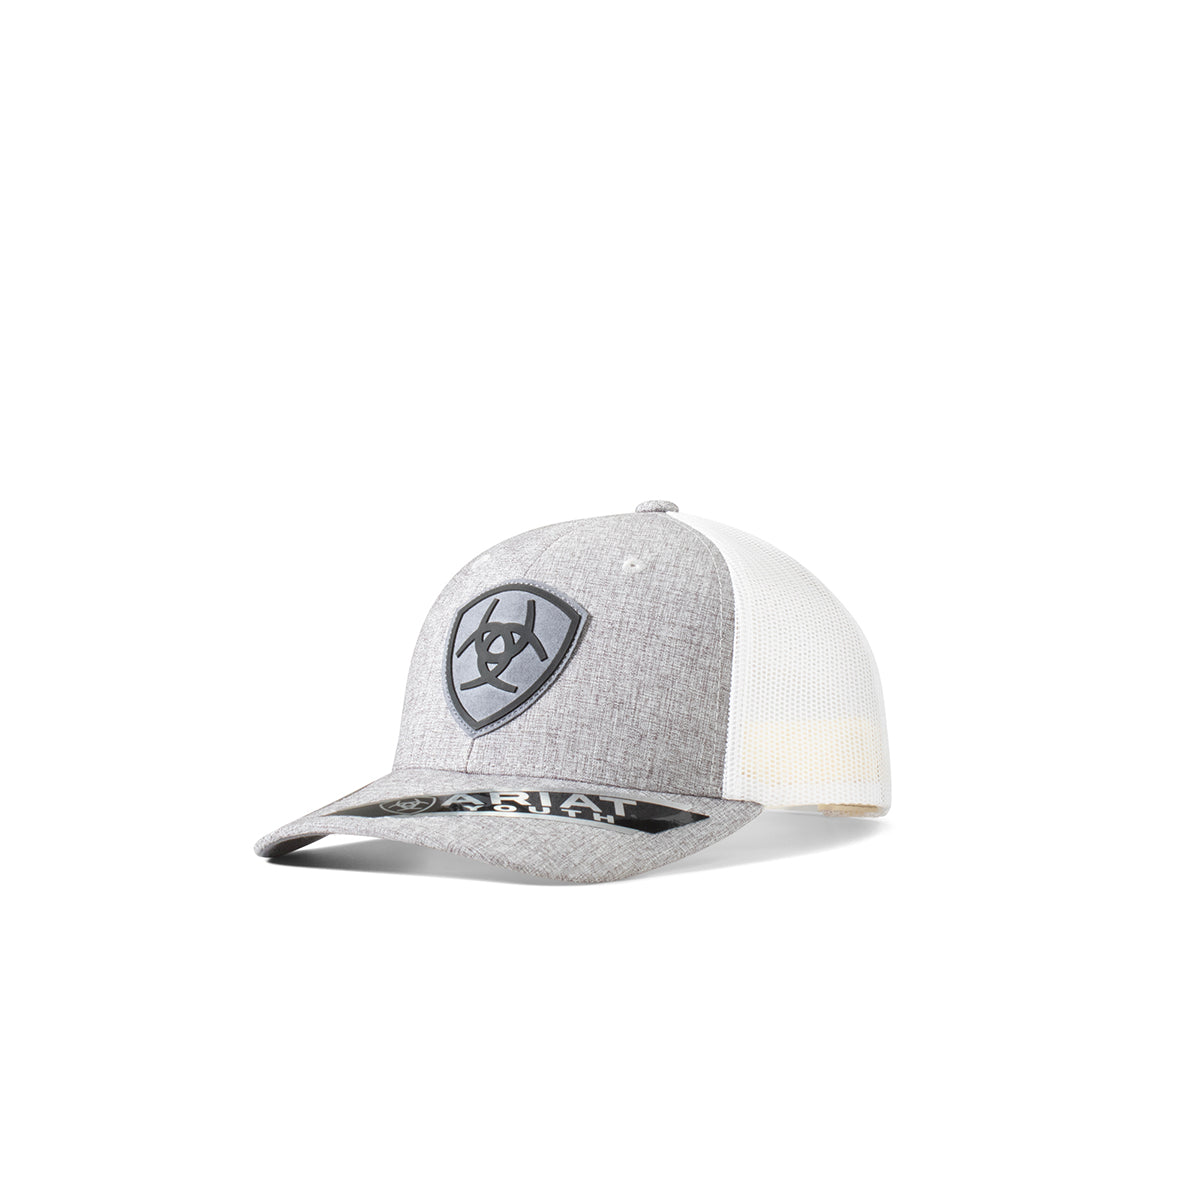 Ariat Youth Logo Snapback Cap - Grey/White